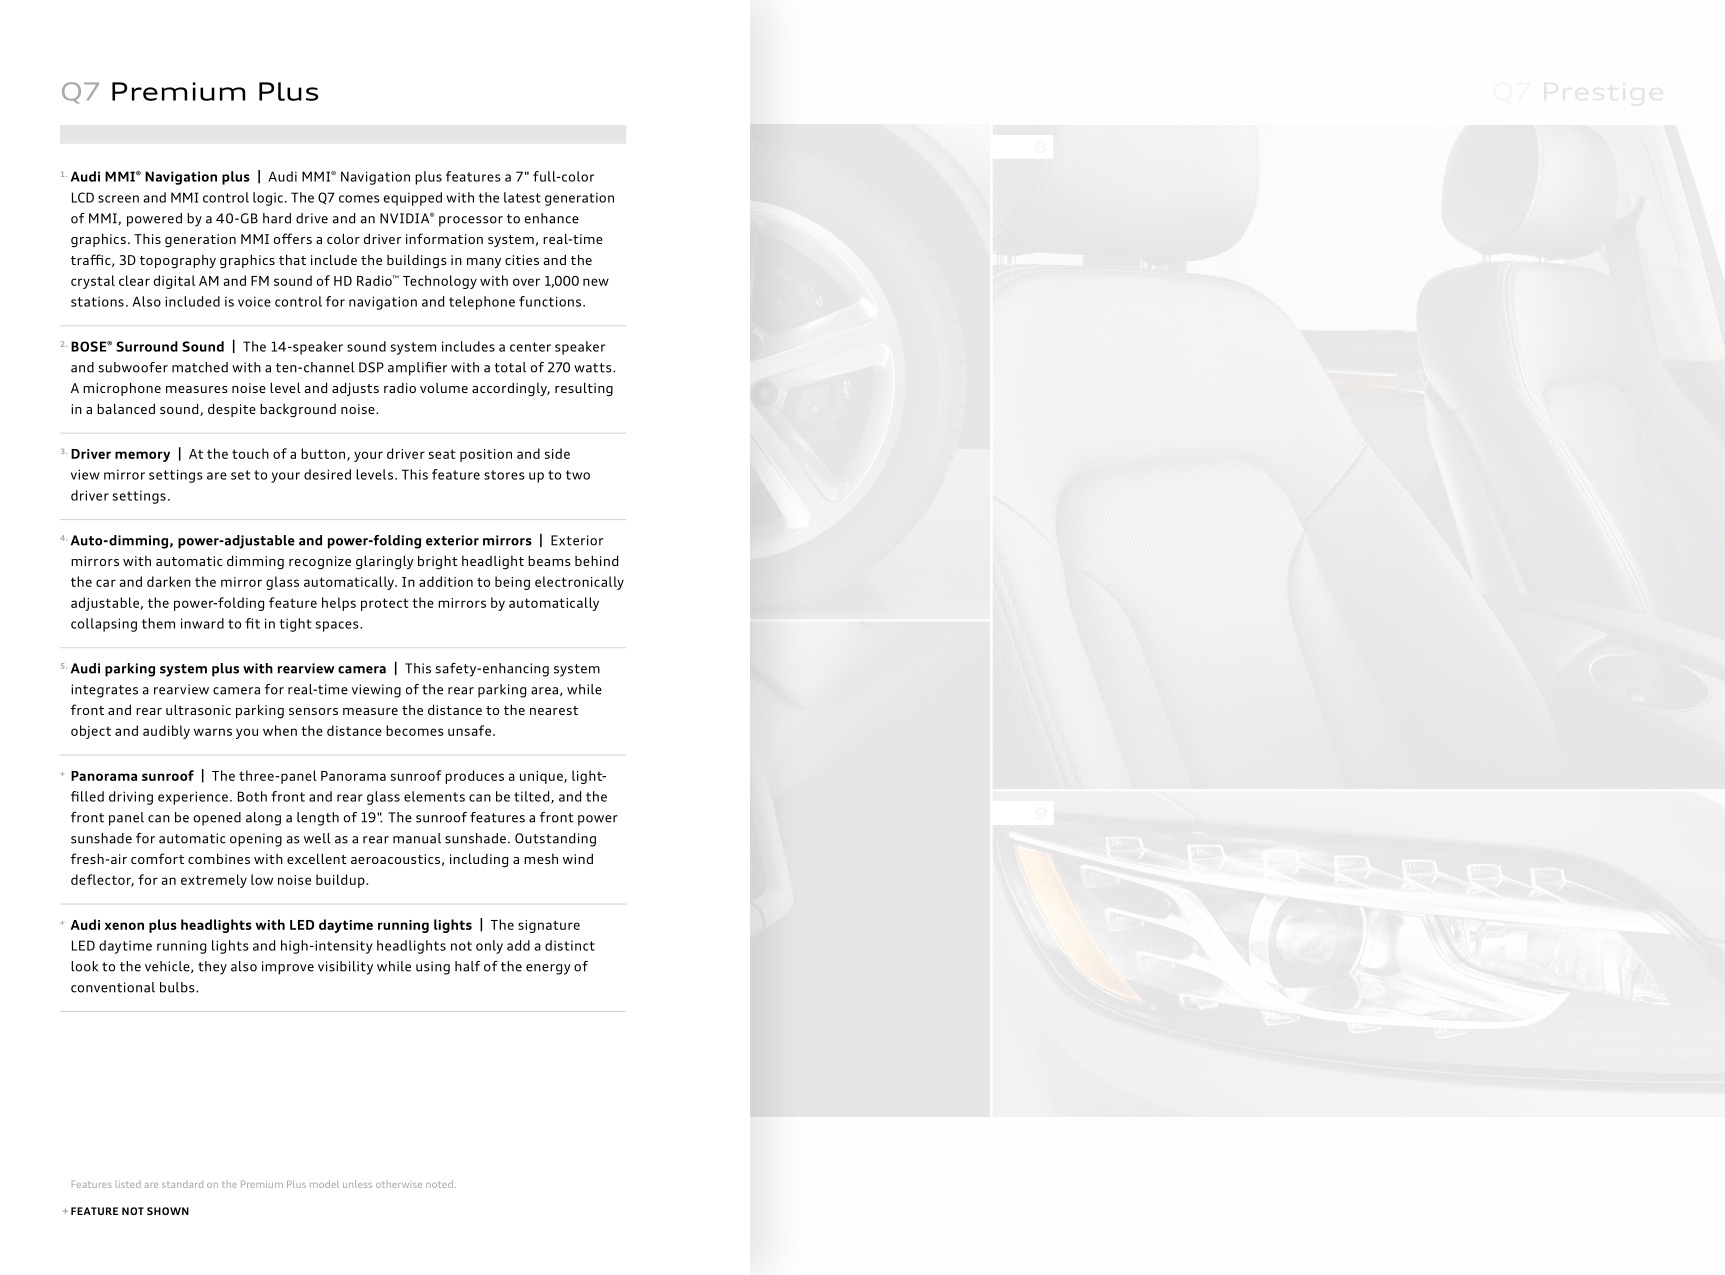 2011 Audi Q7 Brochure Page 11